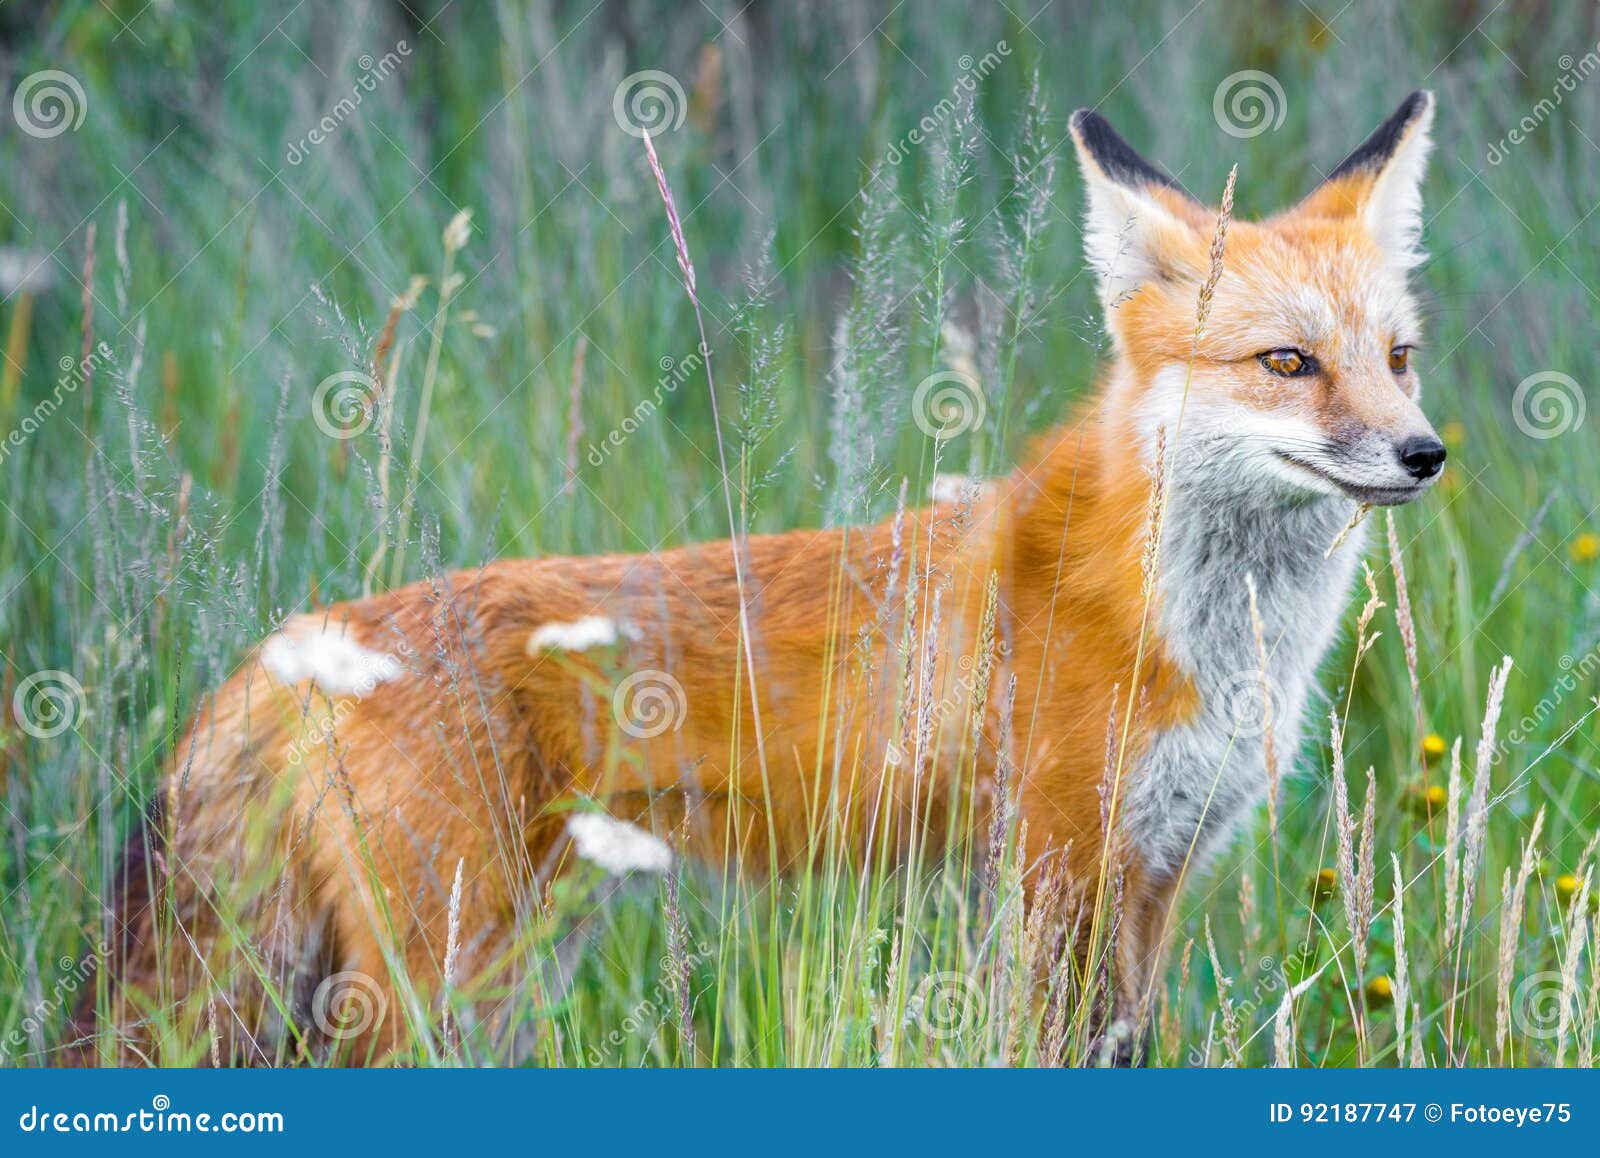 wild red fox in green grass